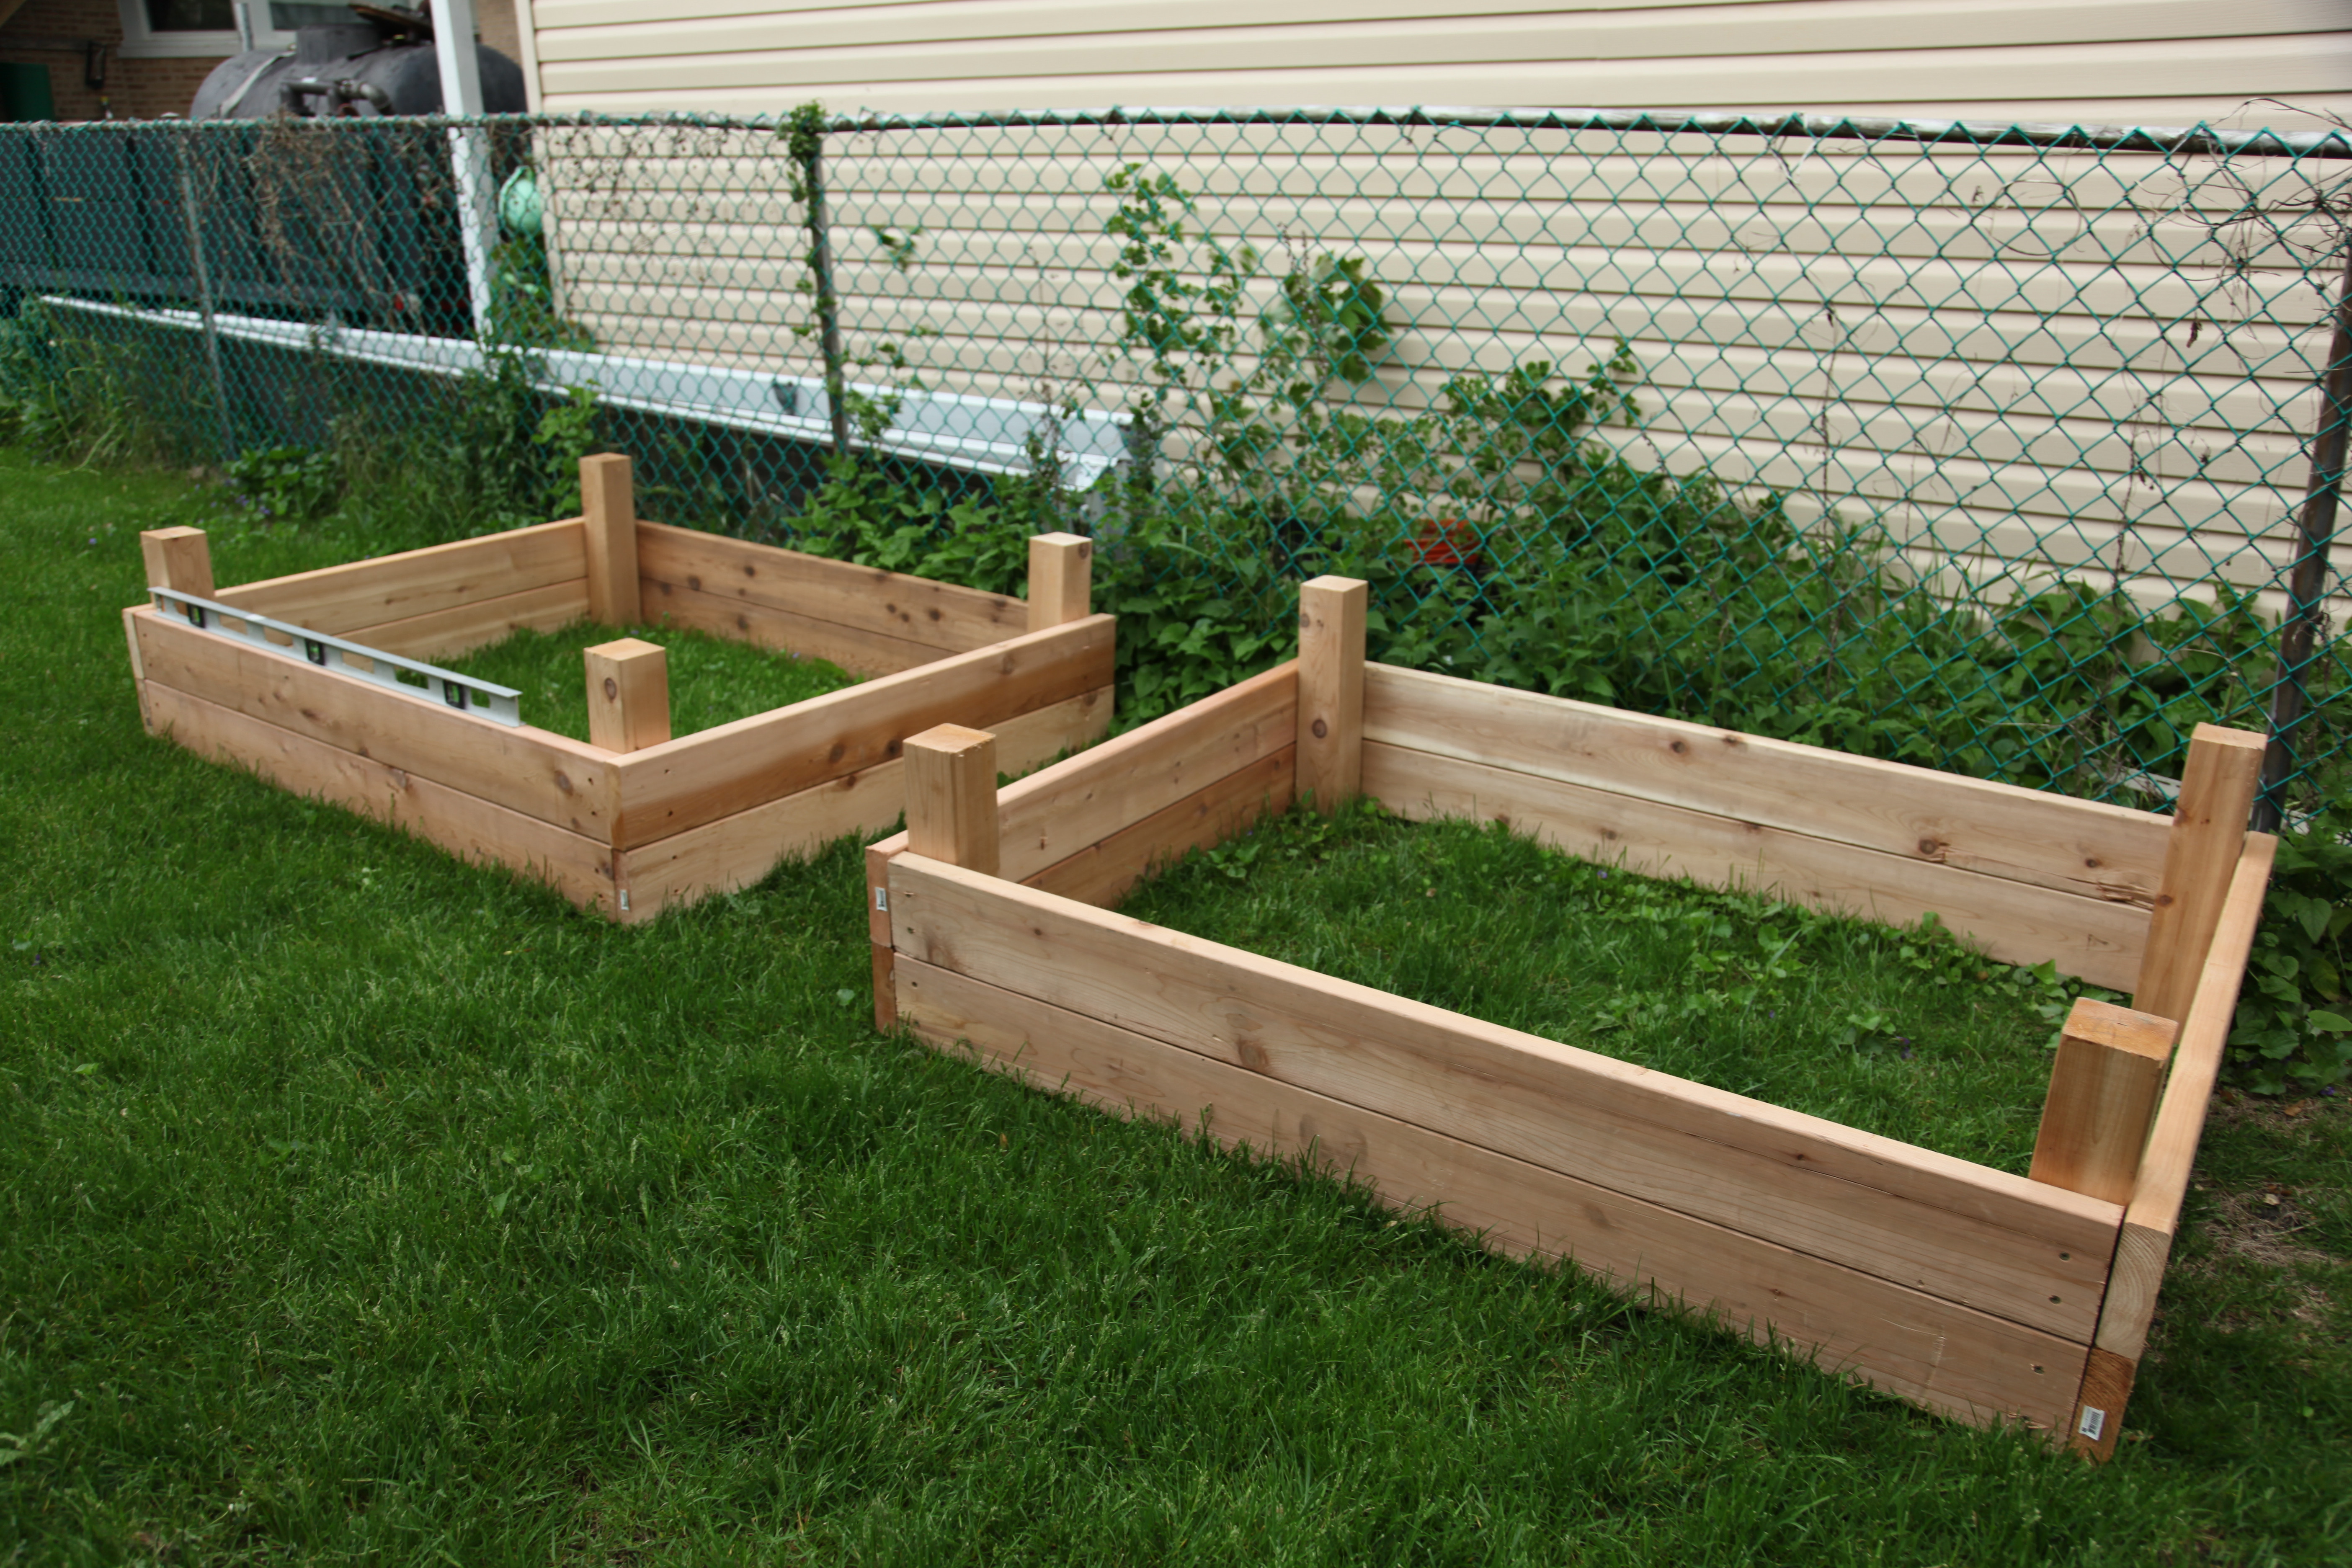 Best ideas about DIY Raised Garden Beds
. Save or Pin DIY Raised Garden Beds Now.